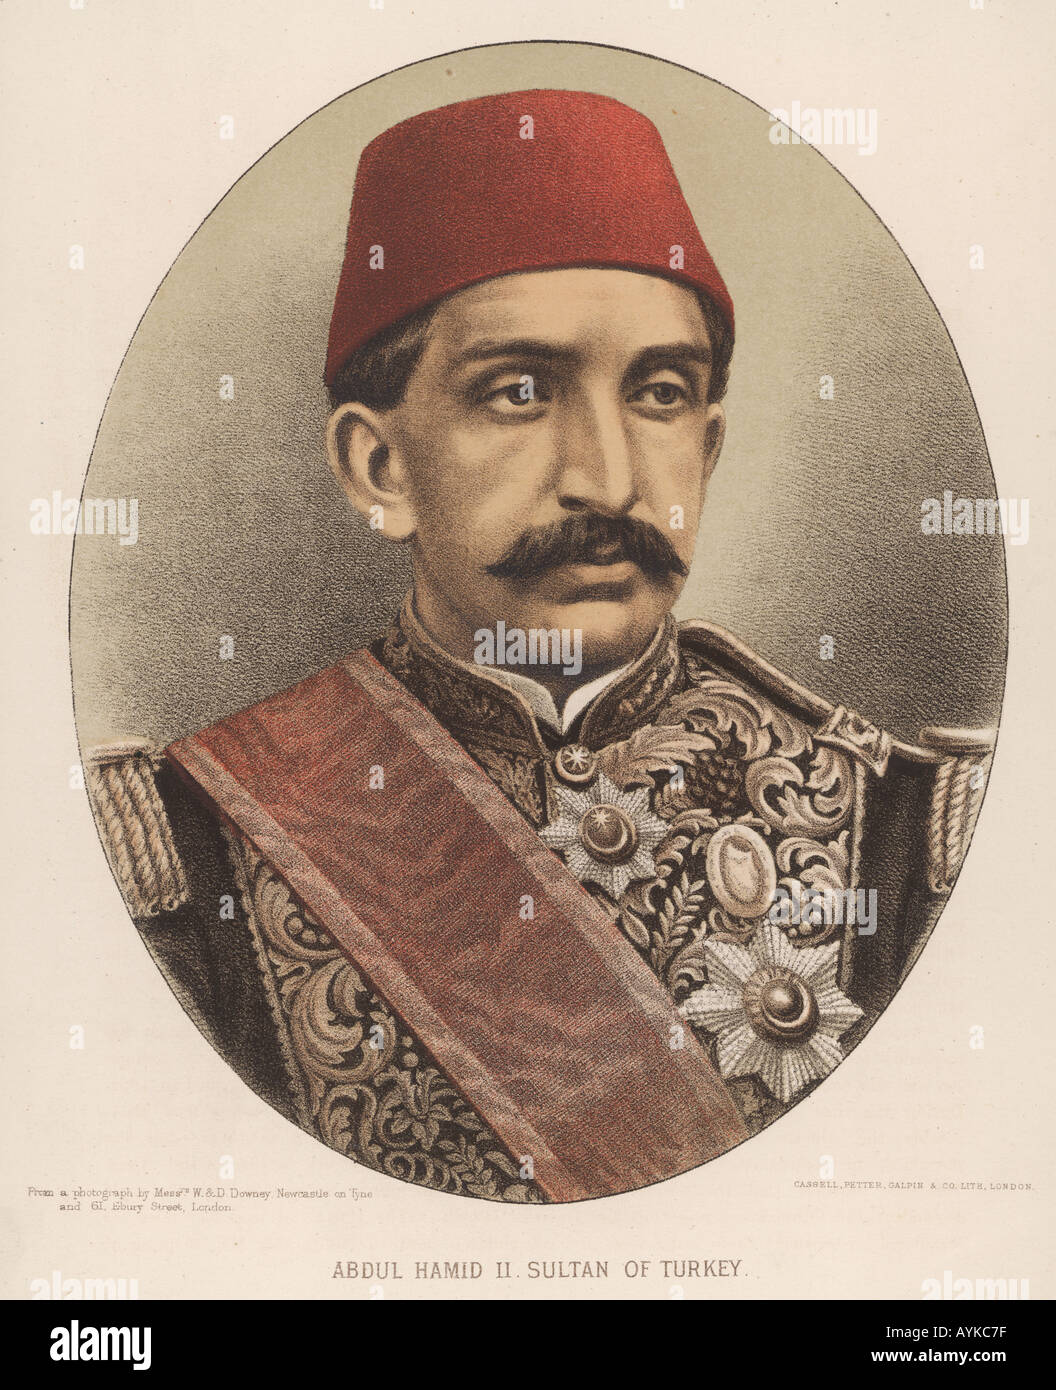 1890 Photo-Ottoman Empire-Abdulhamit II-Sultan of the Turks-Abdul Hamid II 